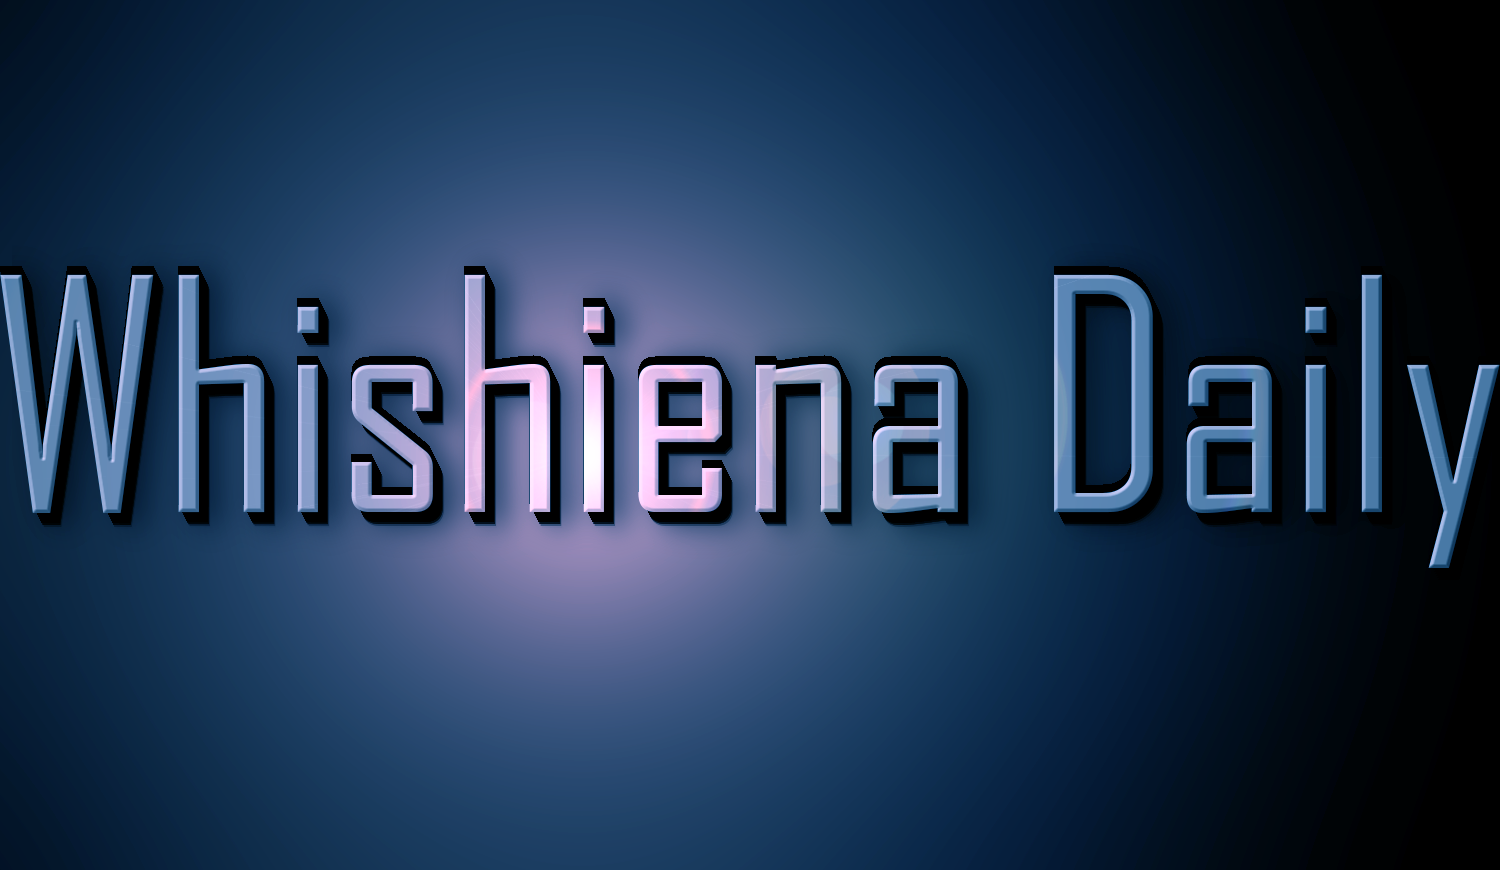 whishiena daily